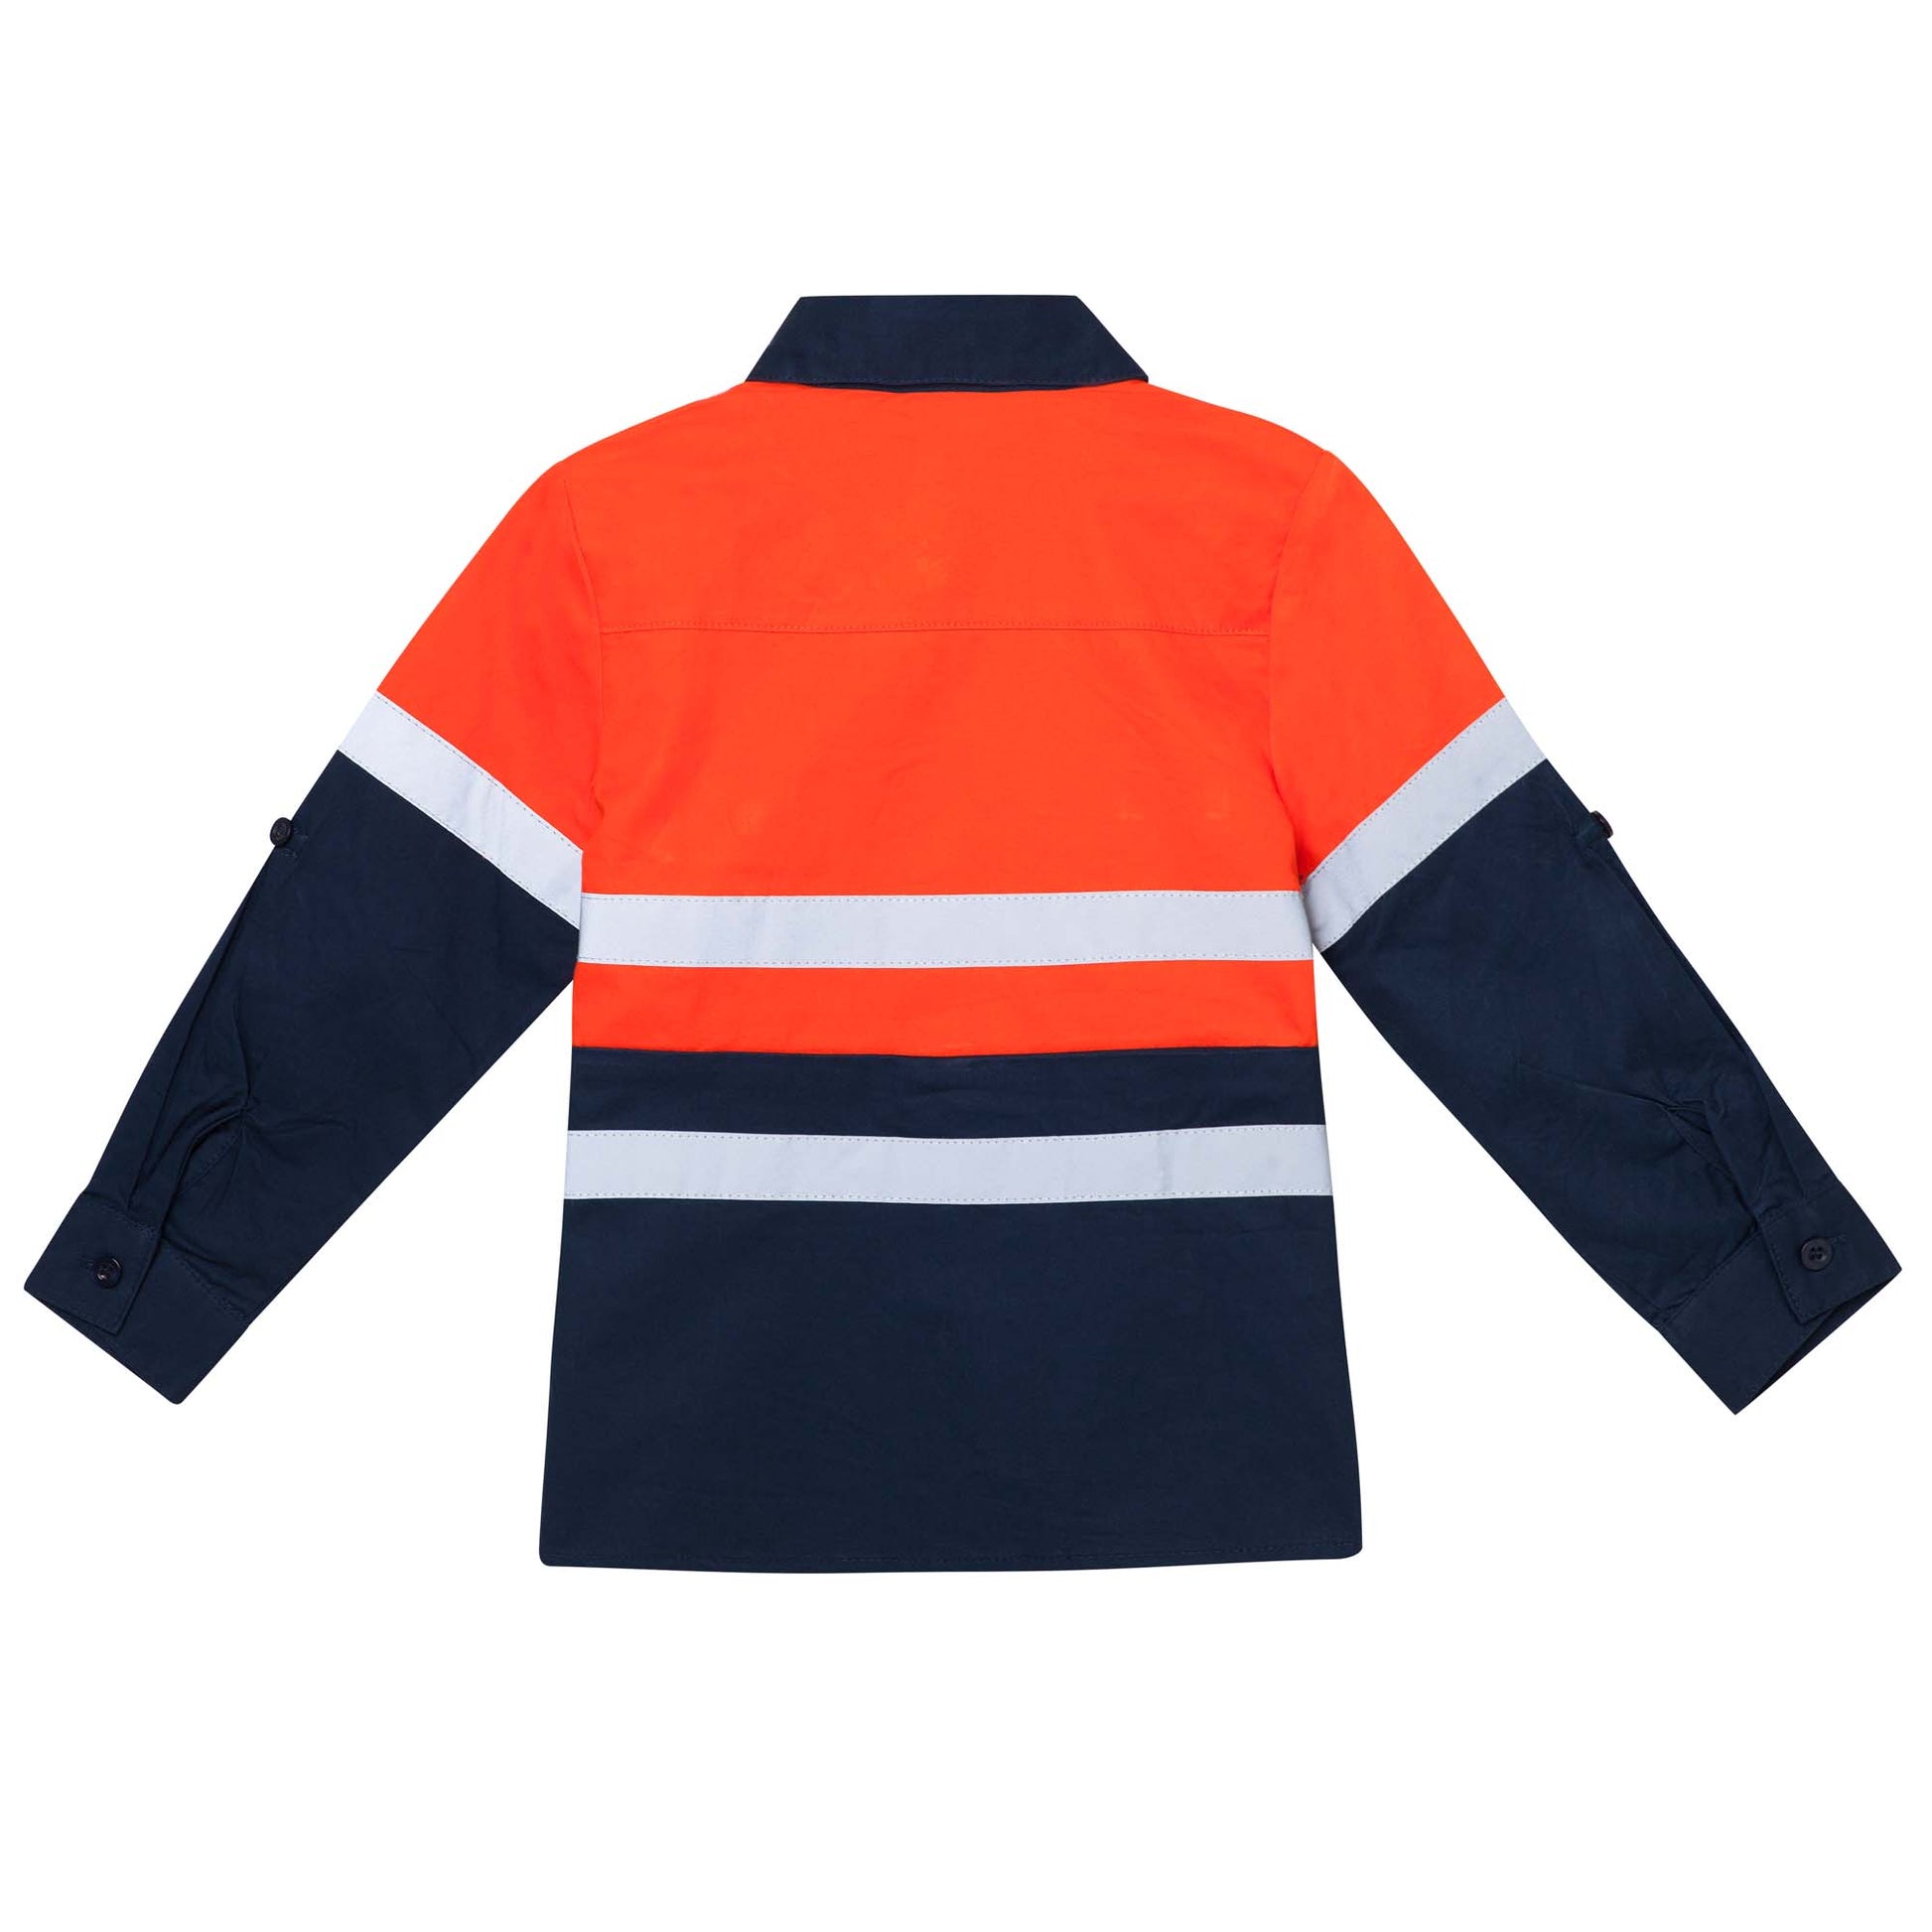 Boys 2T Boutique FLAP HAPPY Clam & Fish Shirt NEW NWT S/S Orange